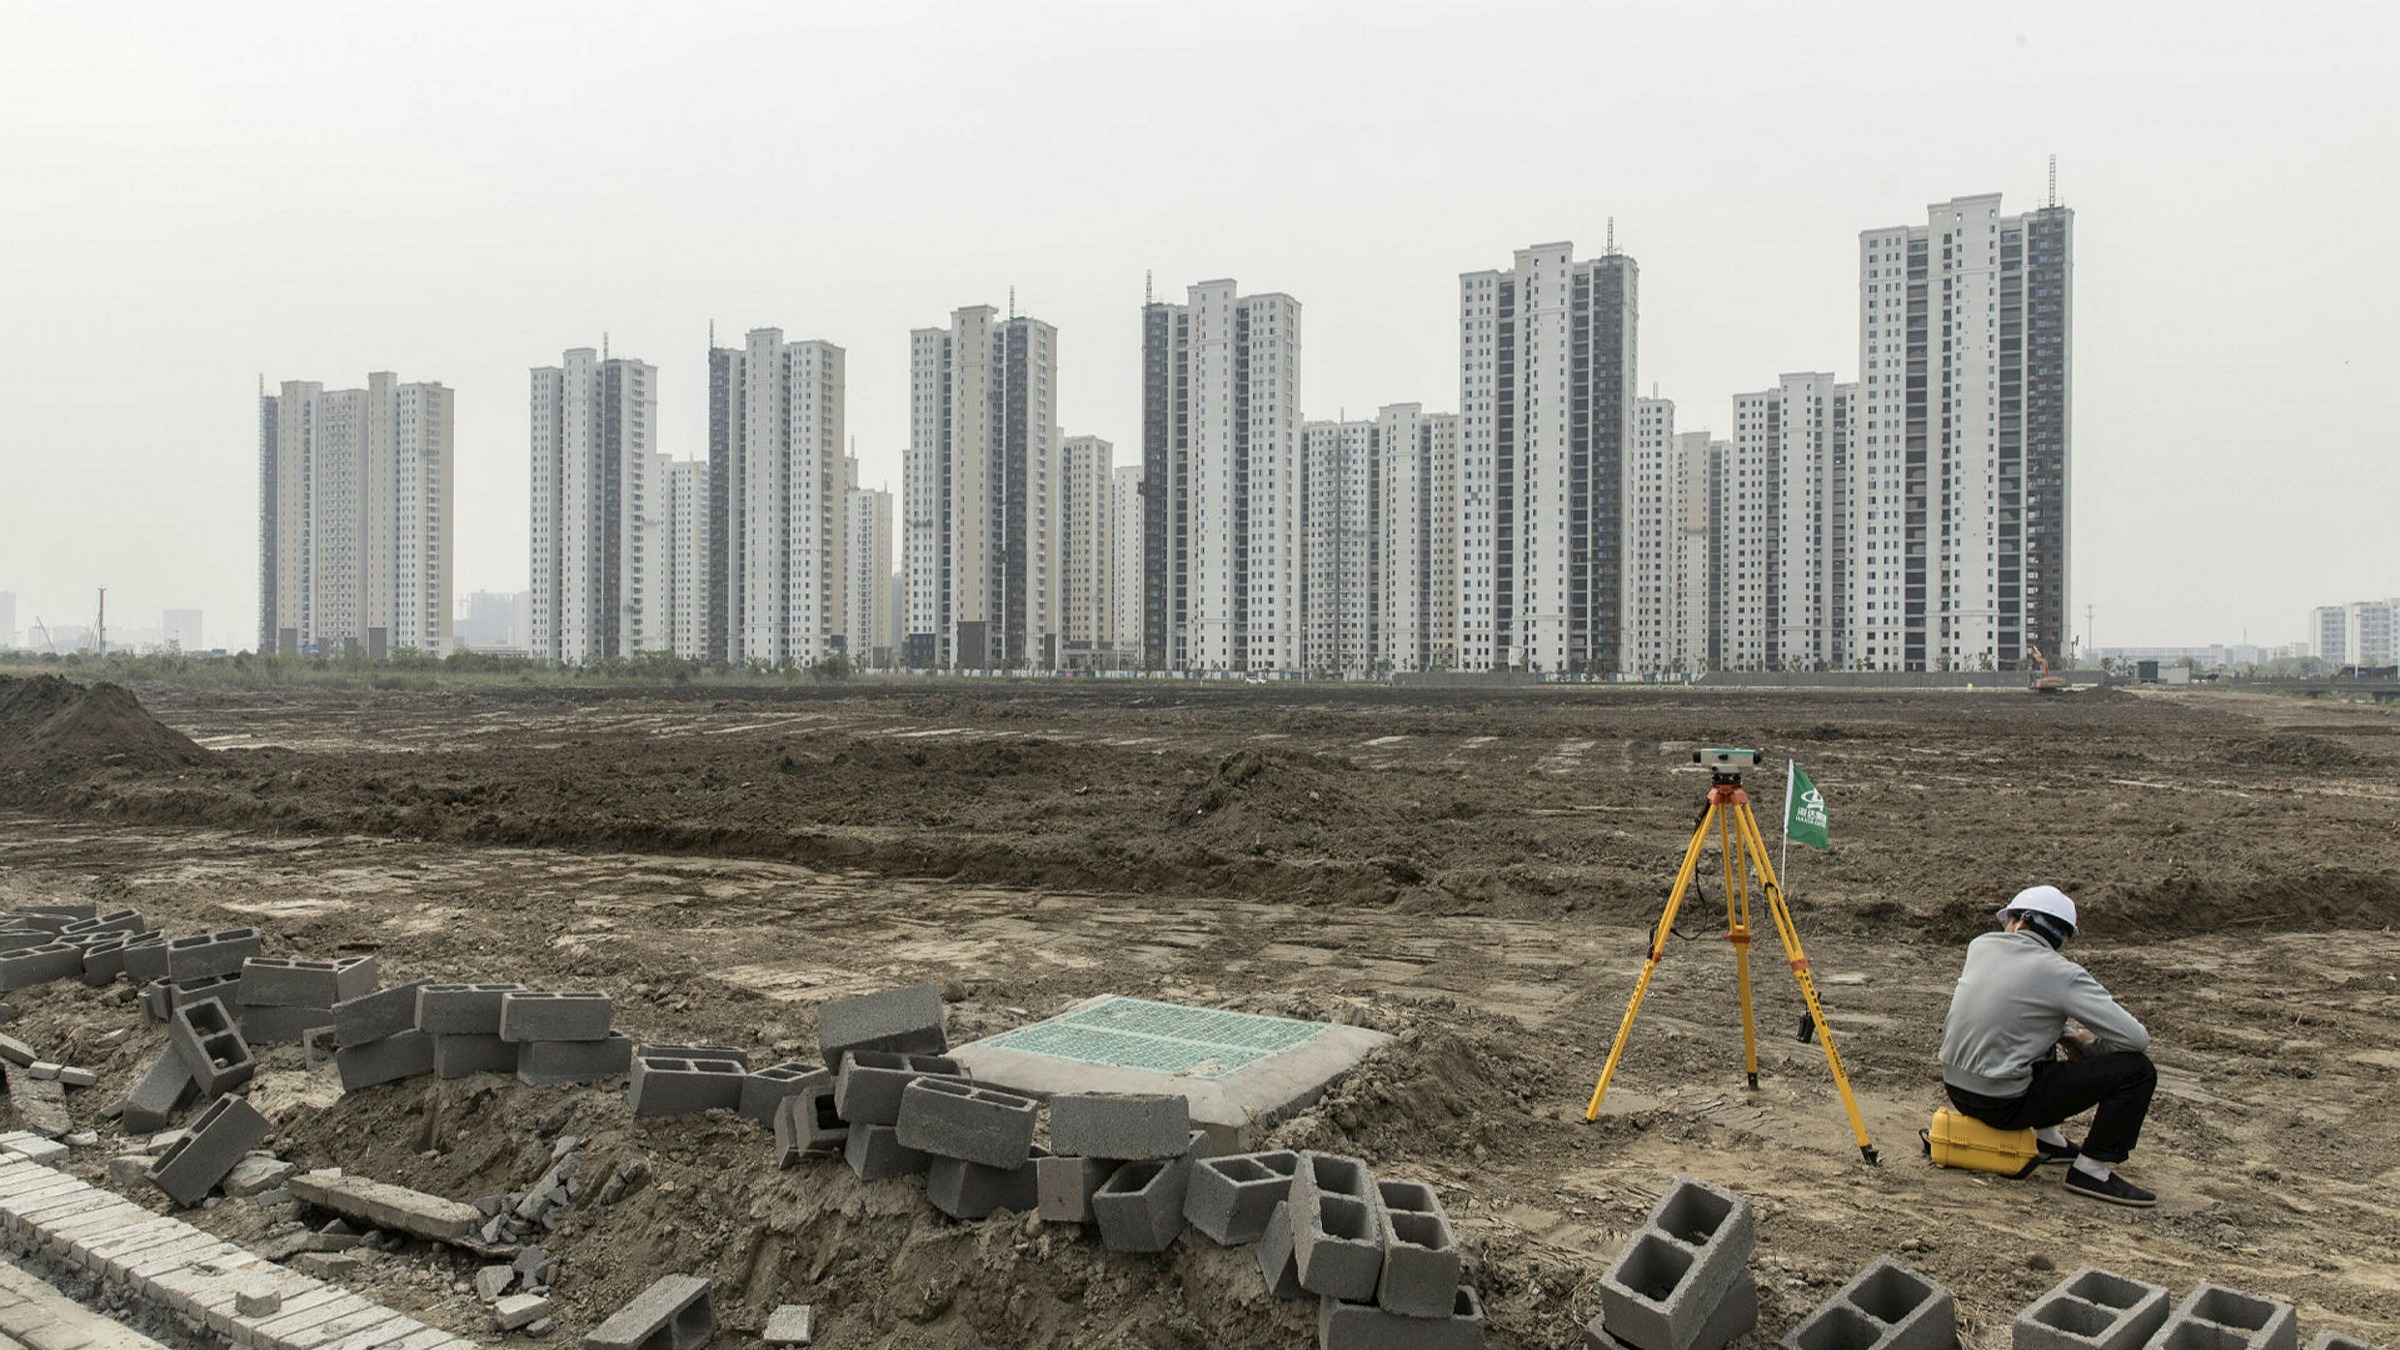 UOBKH: China Property (Underweight)